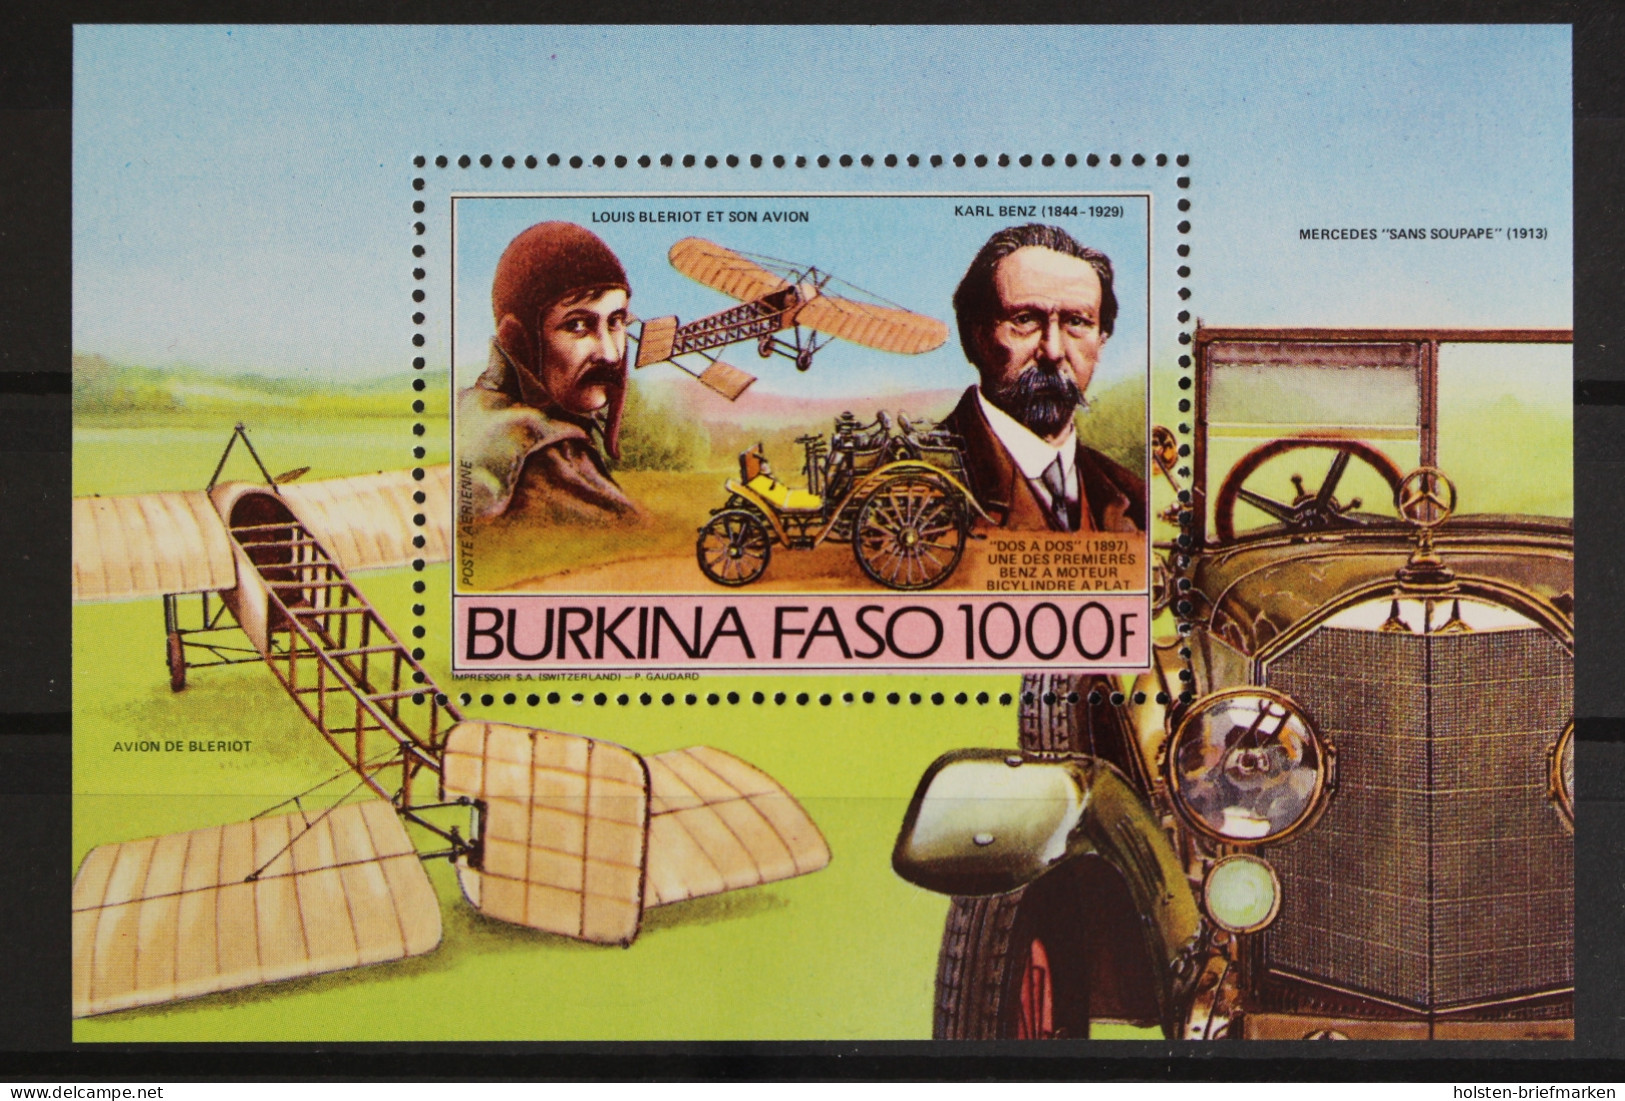 Burkina Faso, MiNr. Block 102, Postfrisch - Burkina Faso (1984-...)